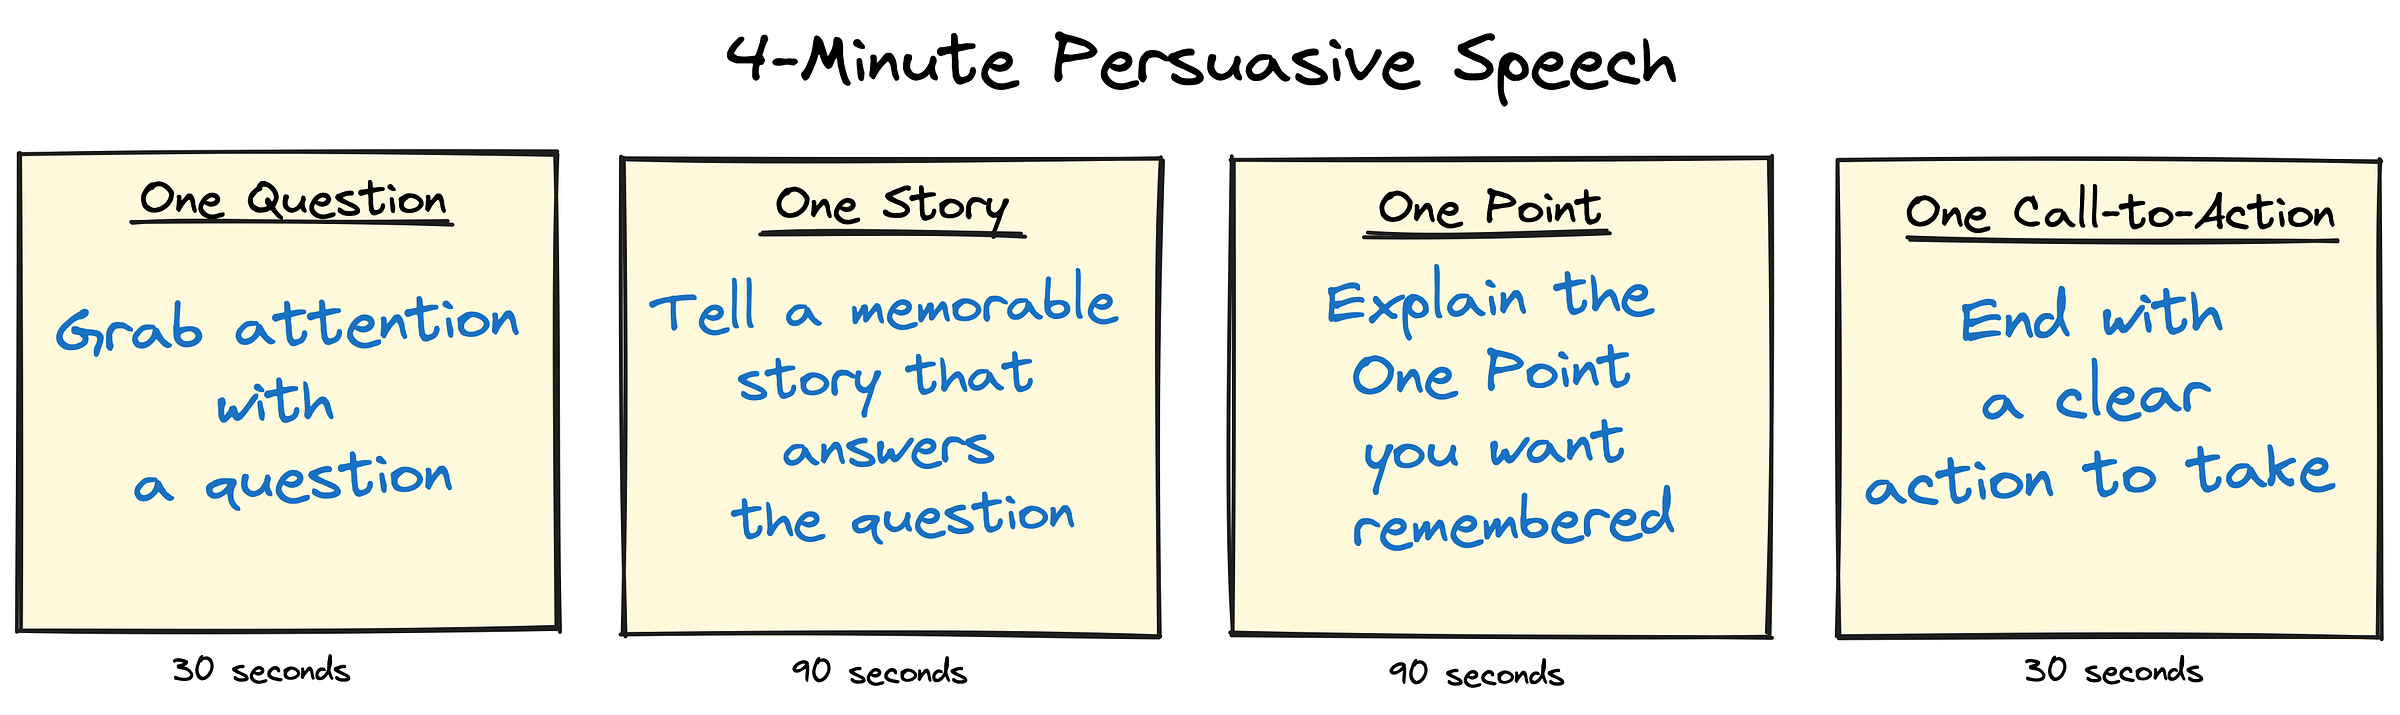 persuasive speech notes